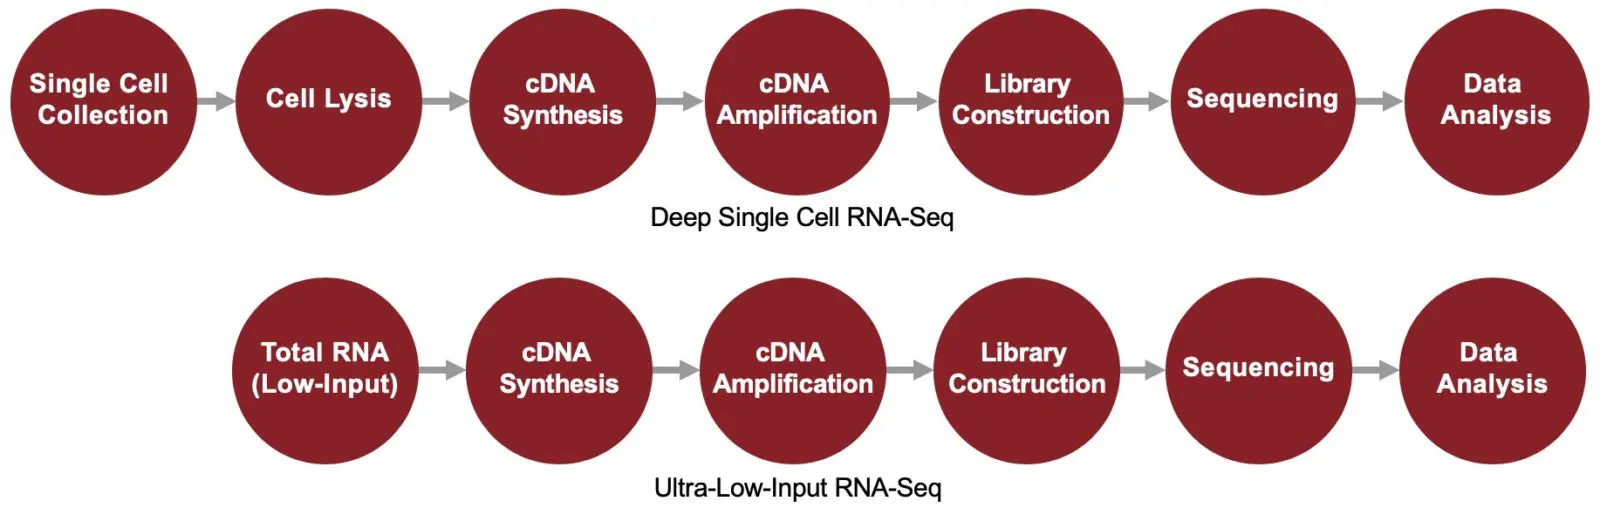 deep-single-cell-RNA-Seq-flowchart-2-1600x508